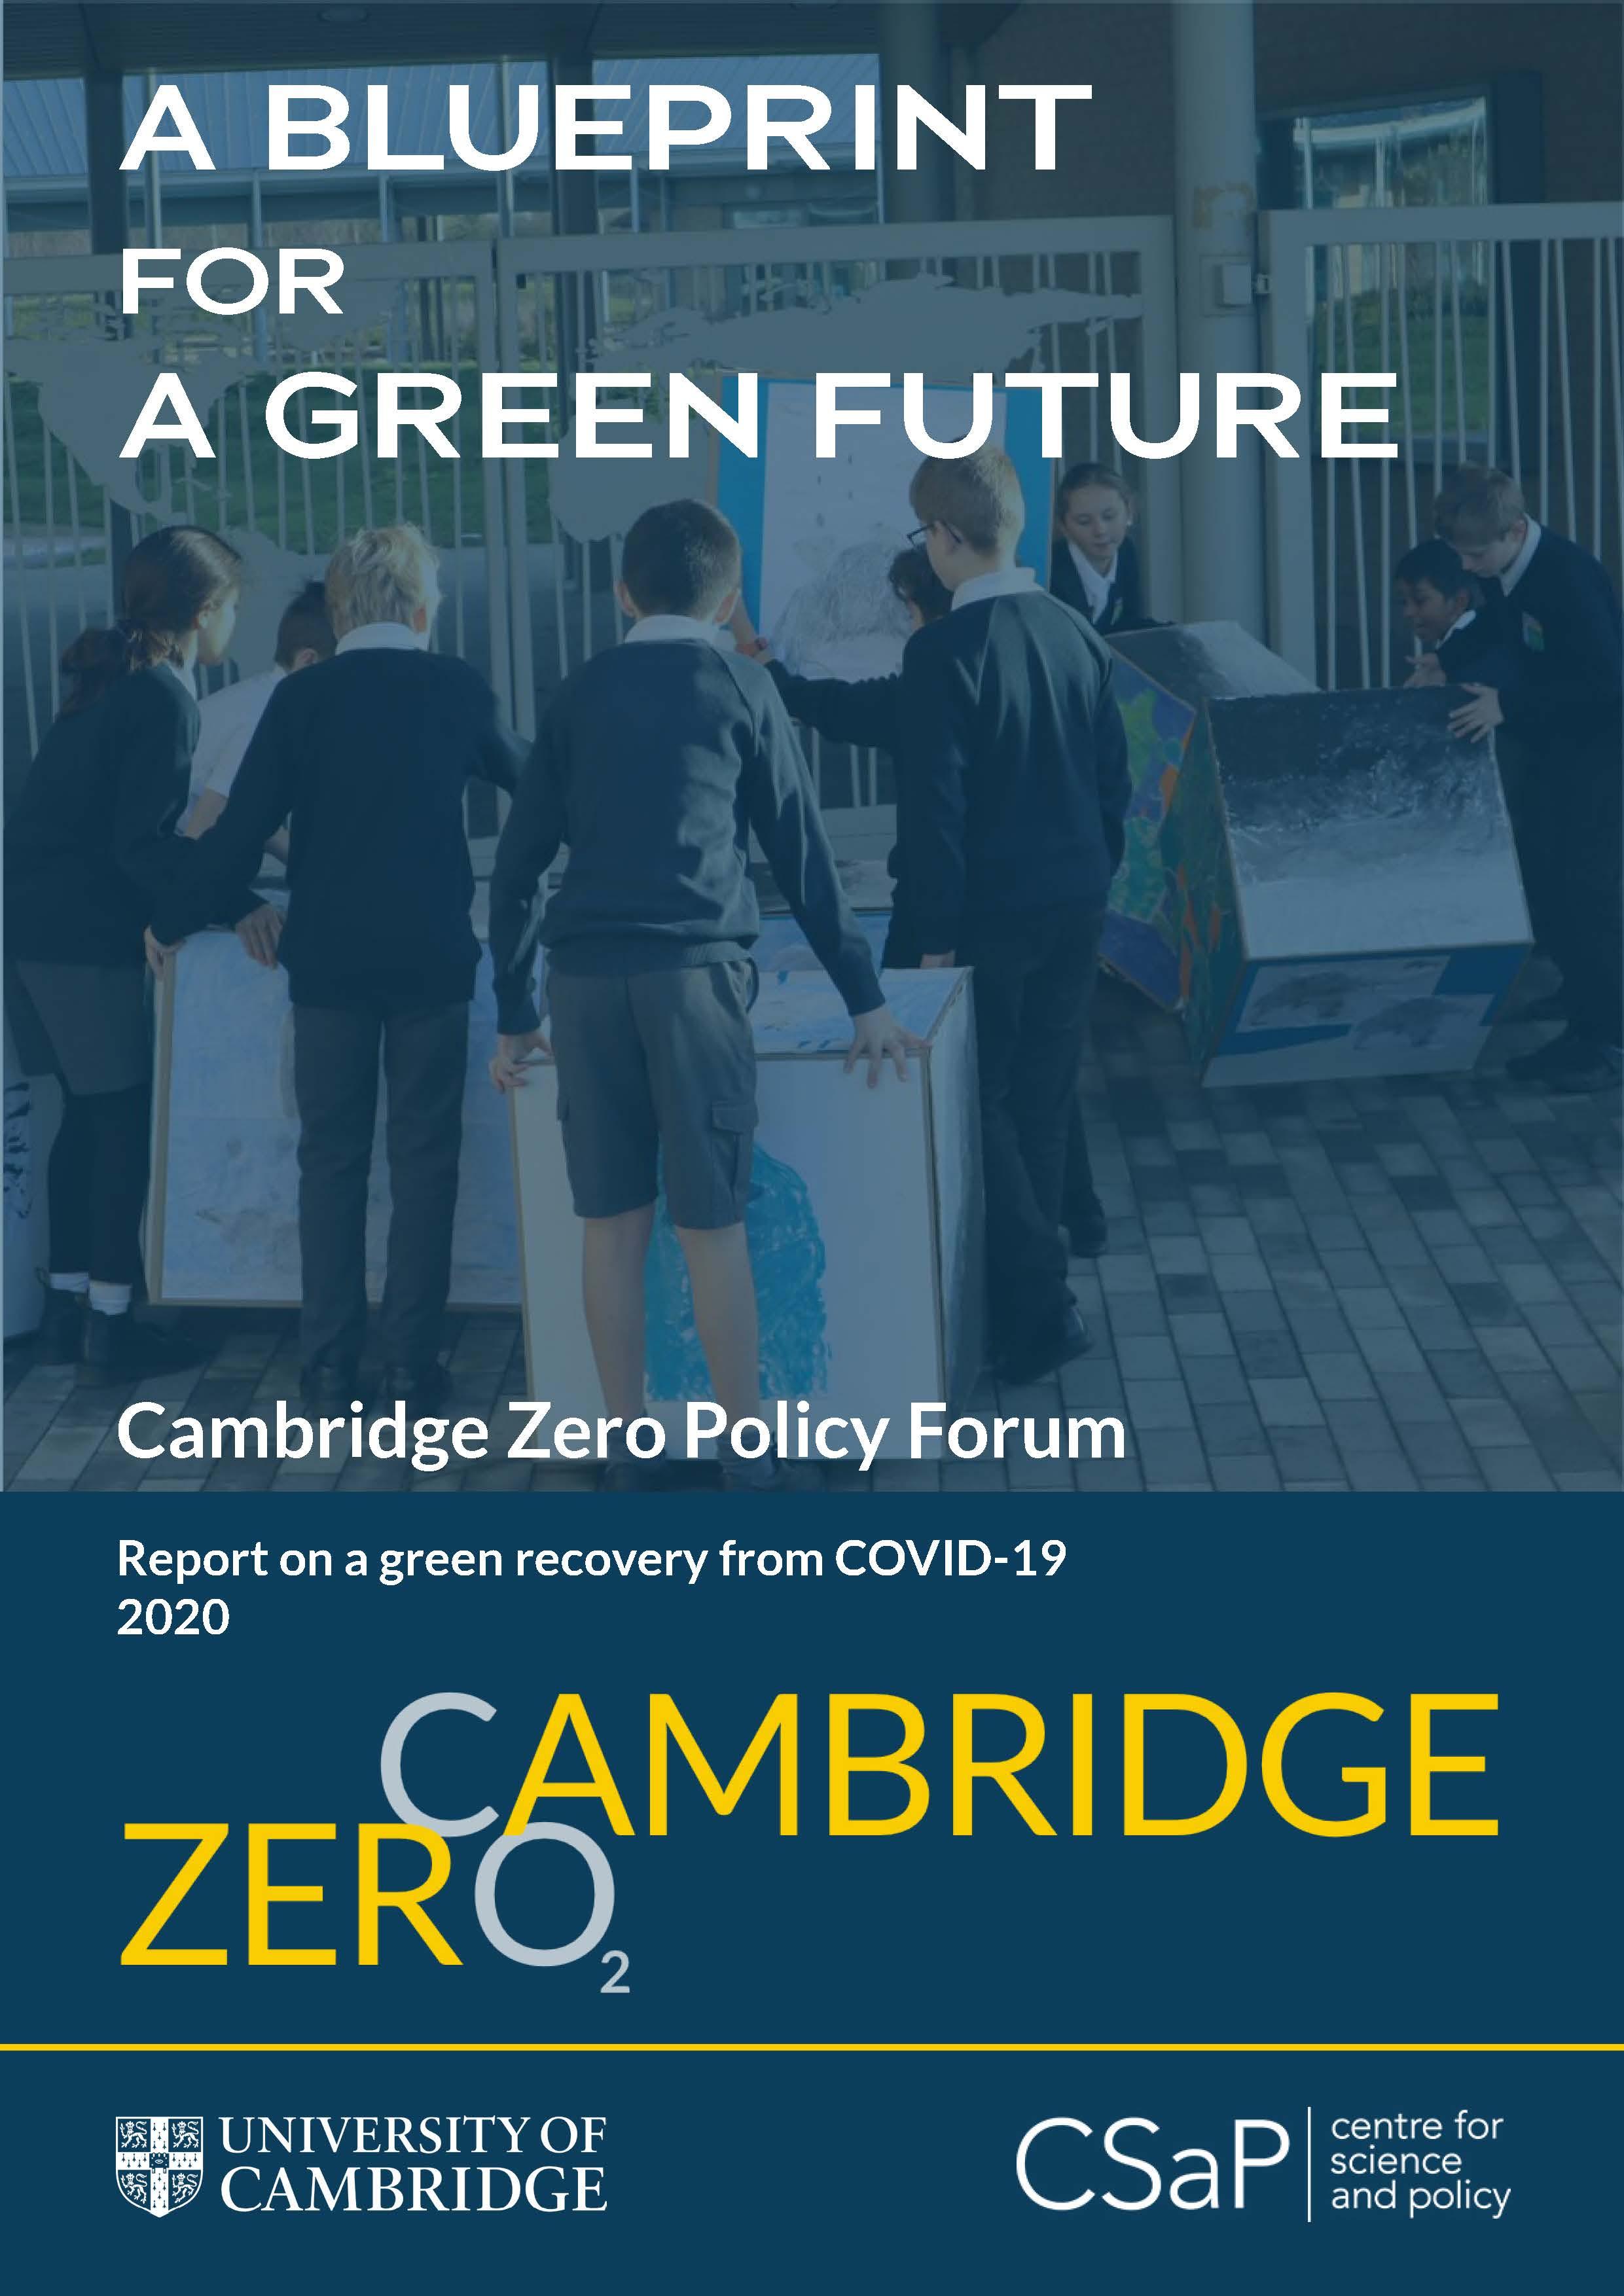 A green future publication cover 